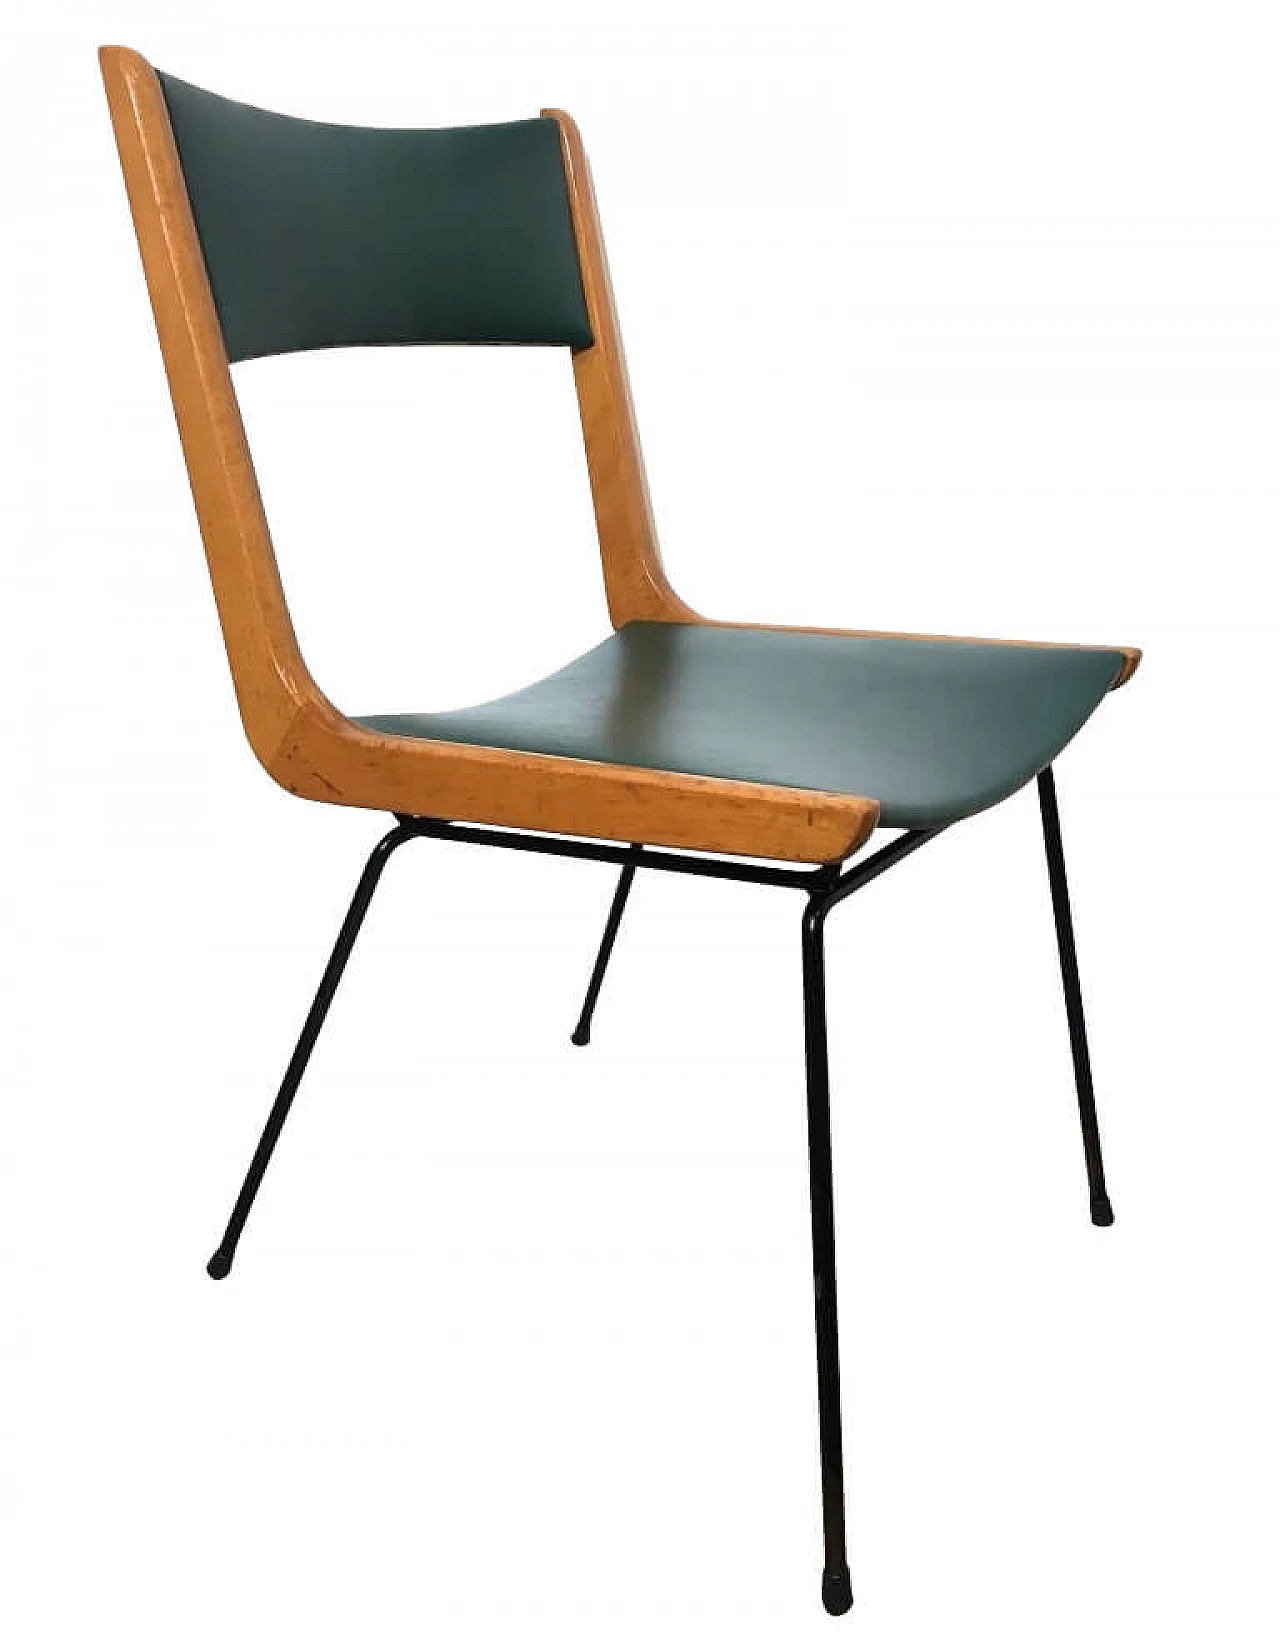 Boomerang chair by Carlo de Carli, 1950s 1185487